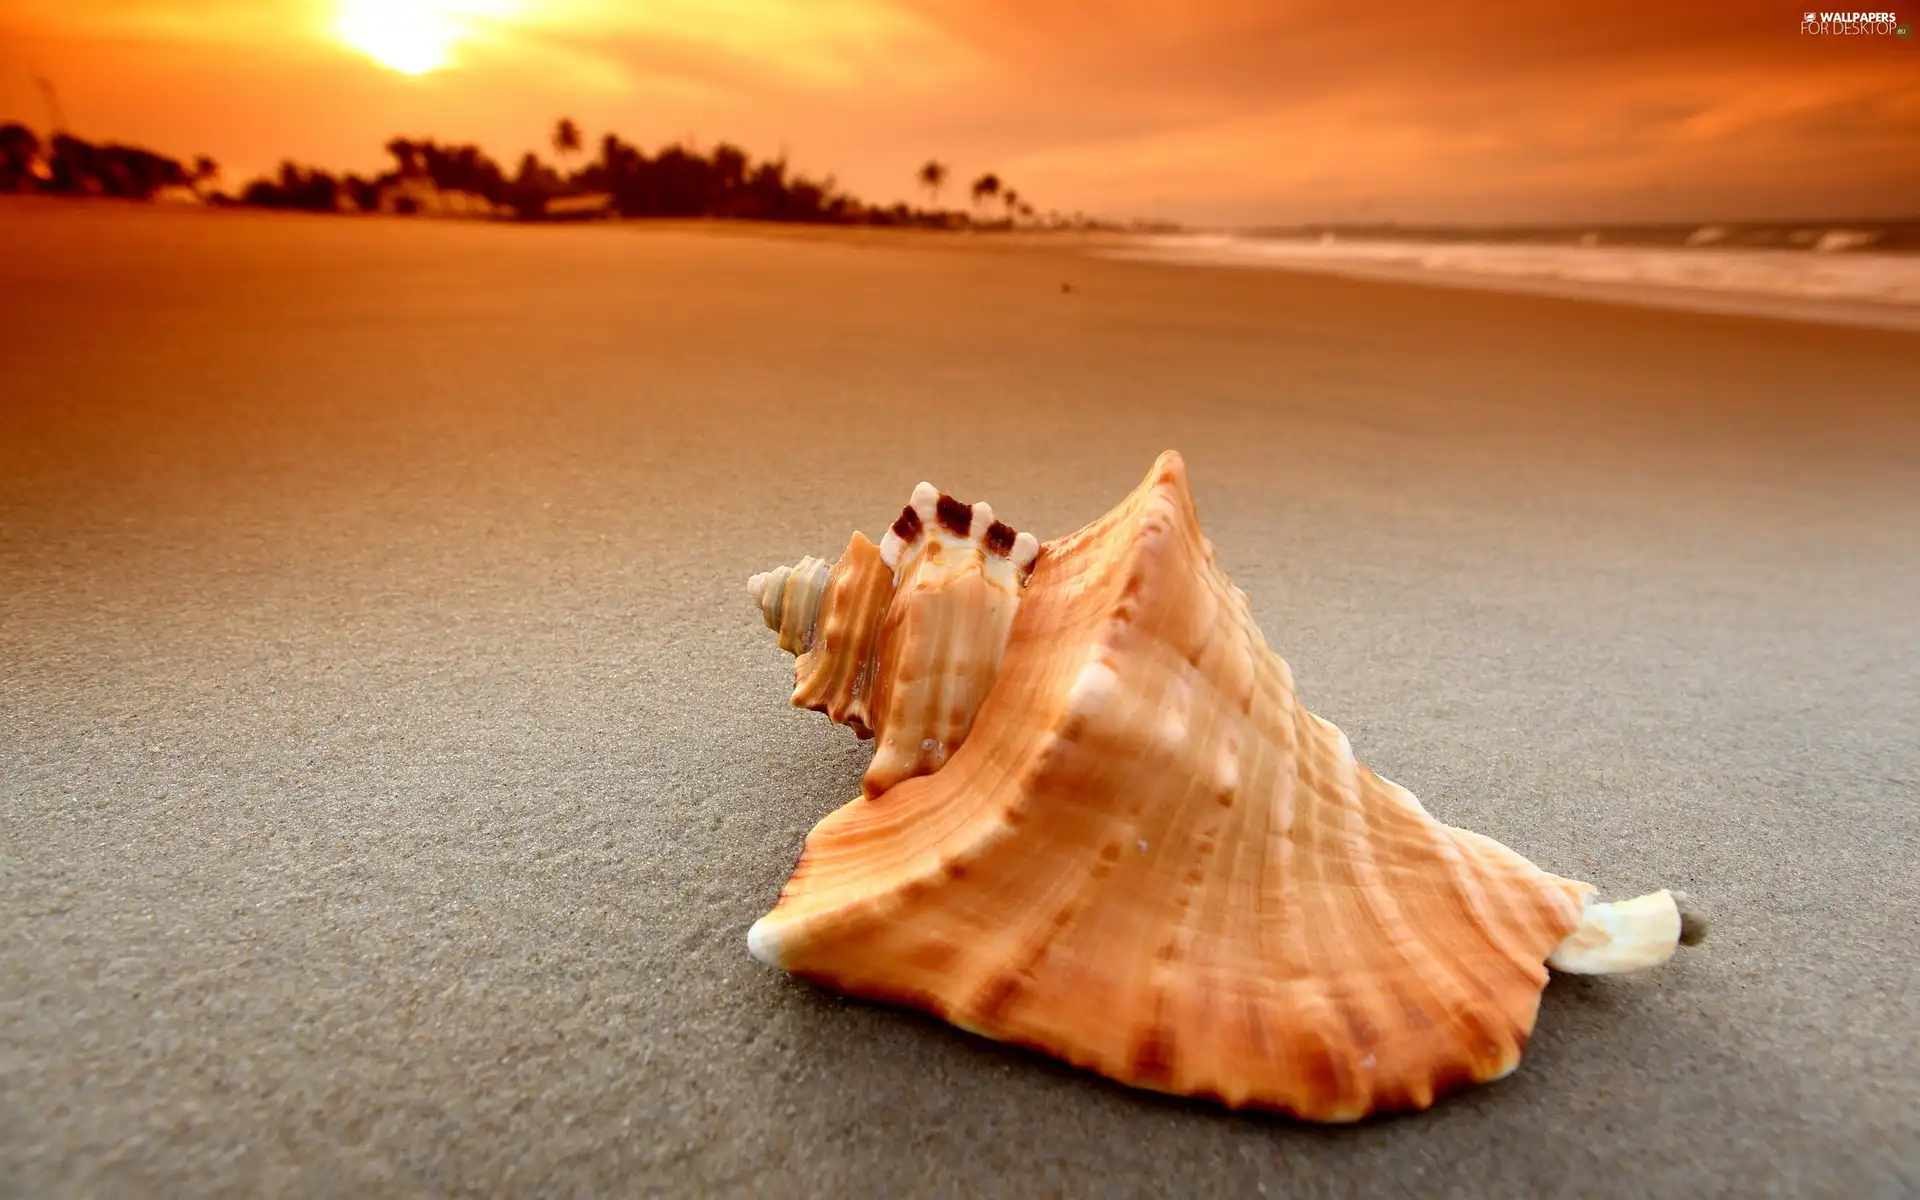 sea, shell, Beaches